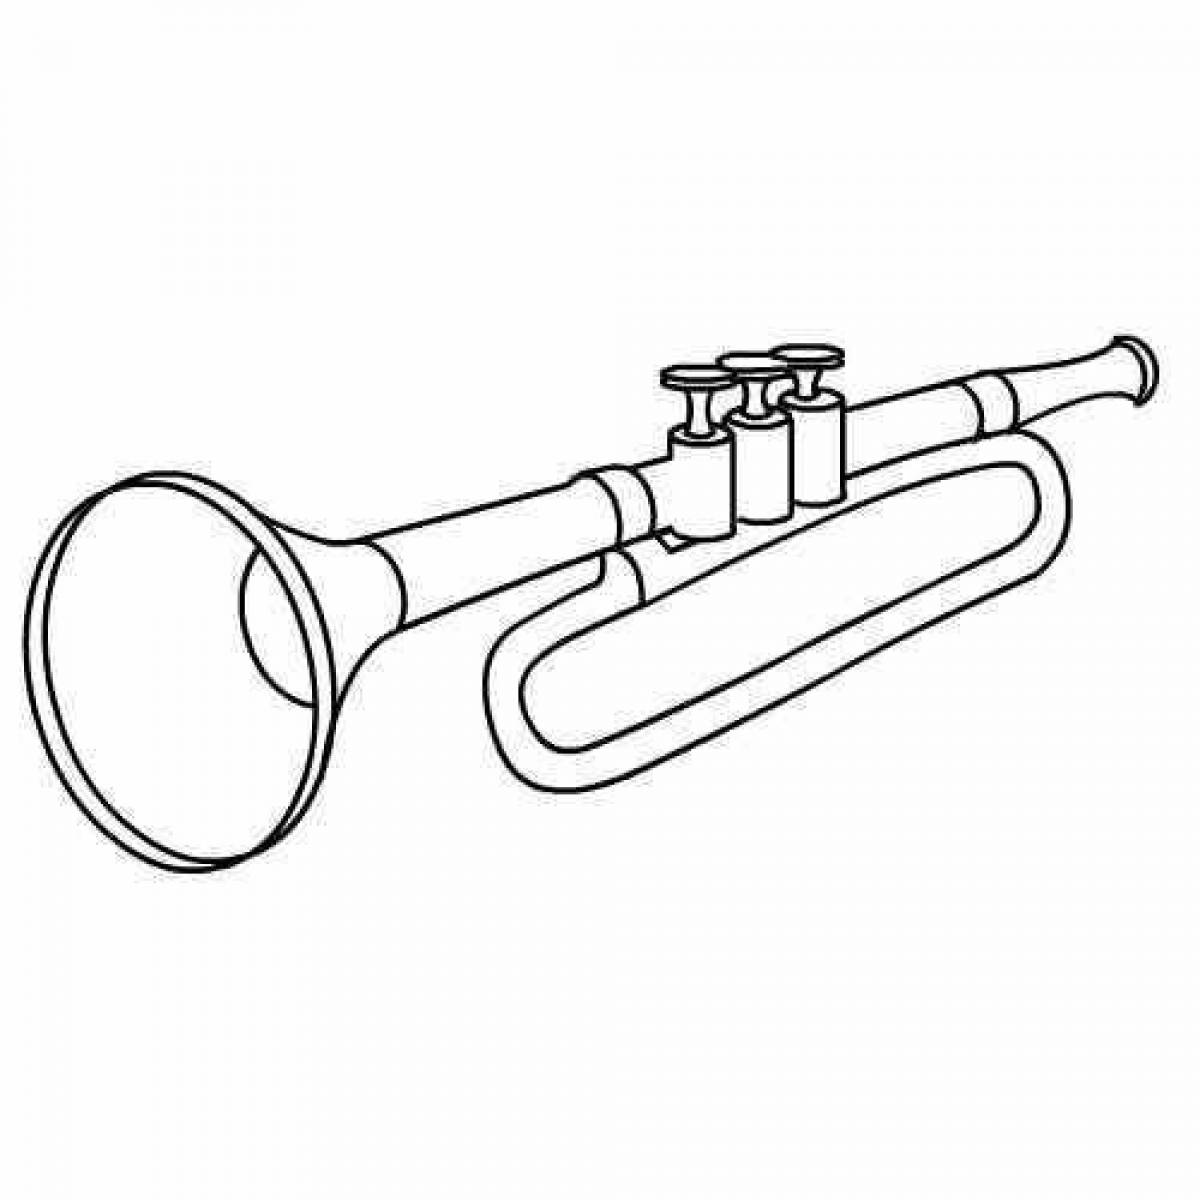 Trumpet picture